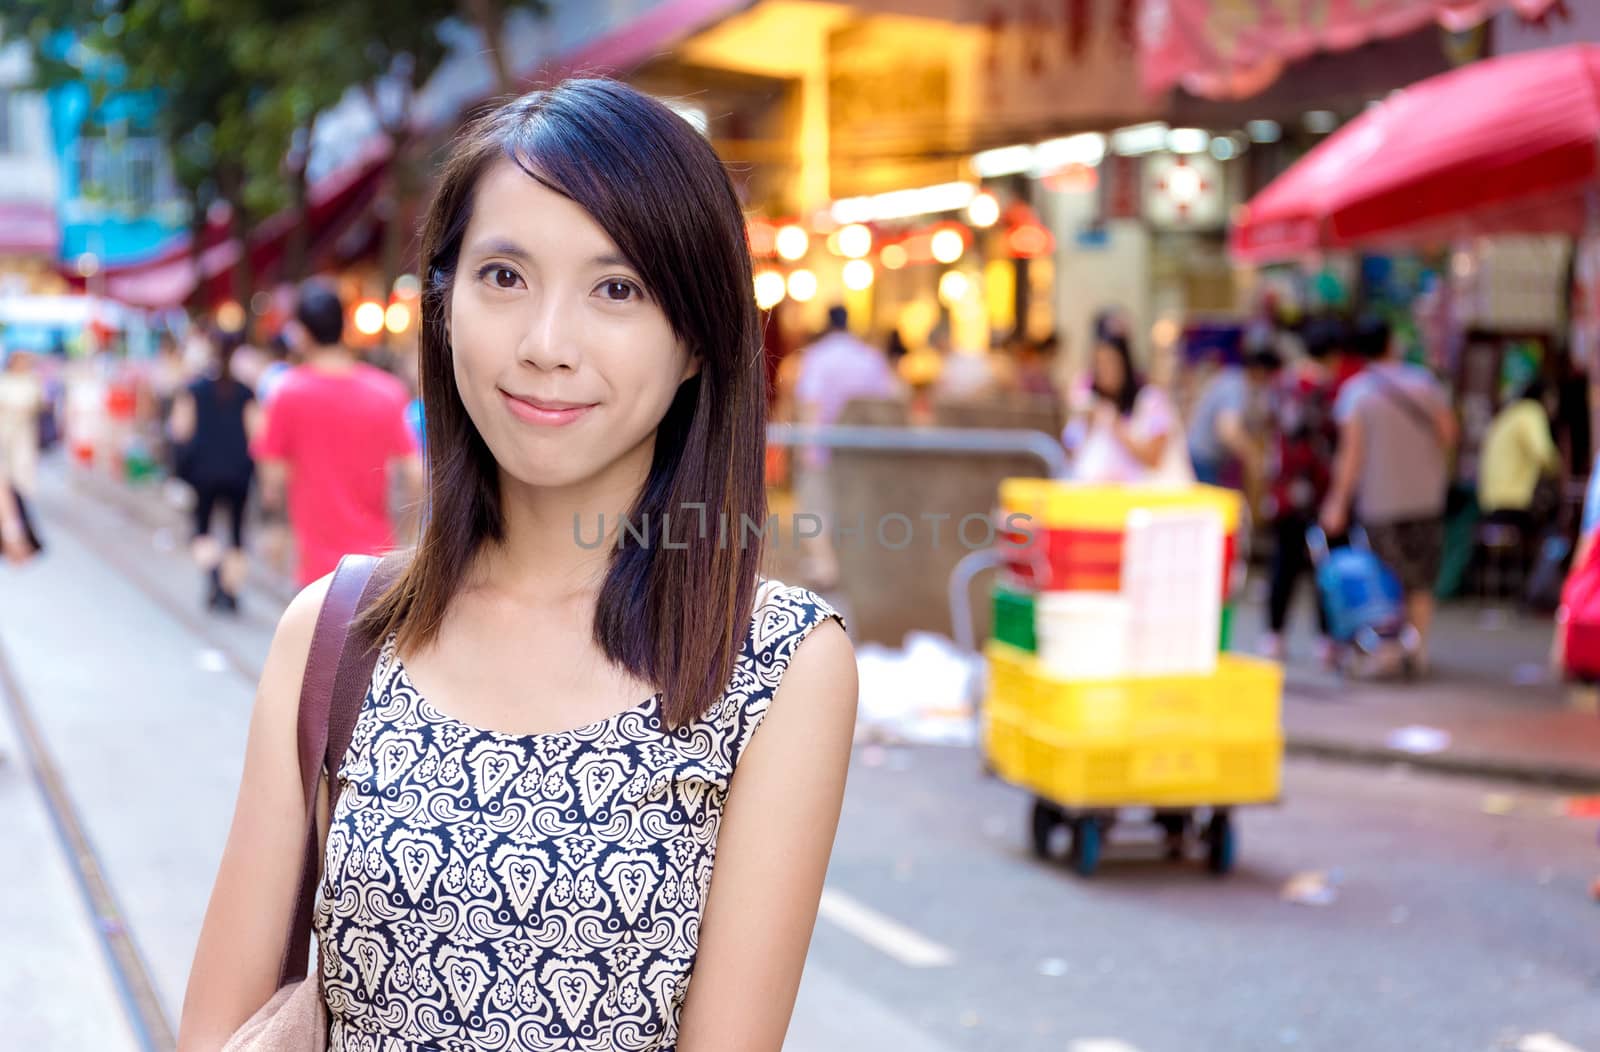 Hong Kong woman in wet market by leungchopan